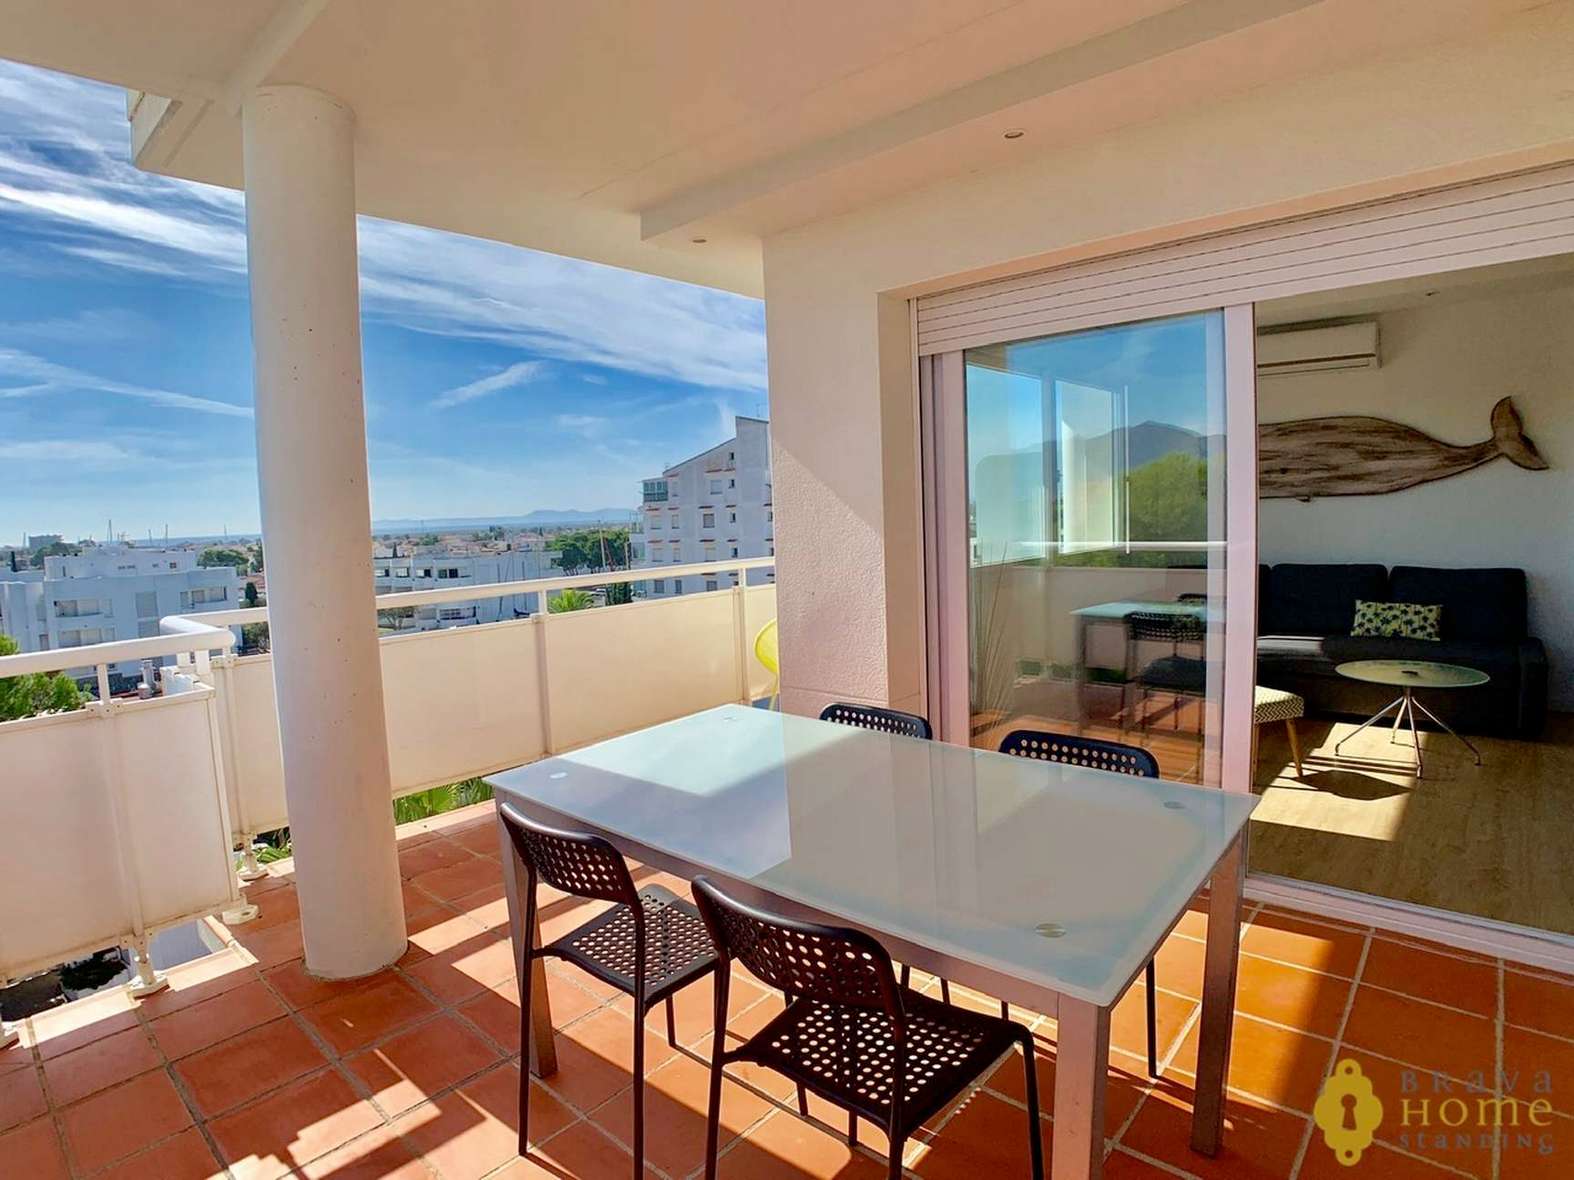 Beautiful apartment with terrace and pool, for sale in Rosas - Santa Margarita